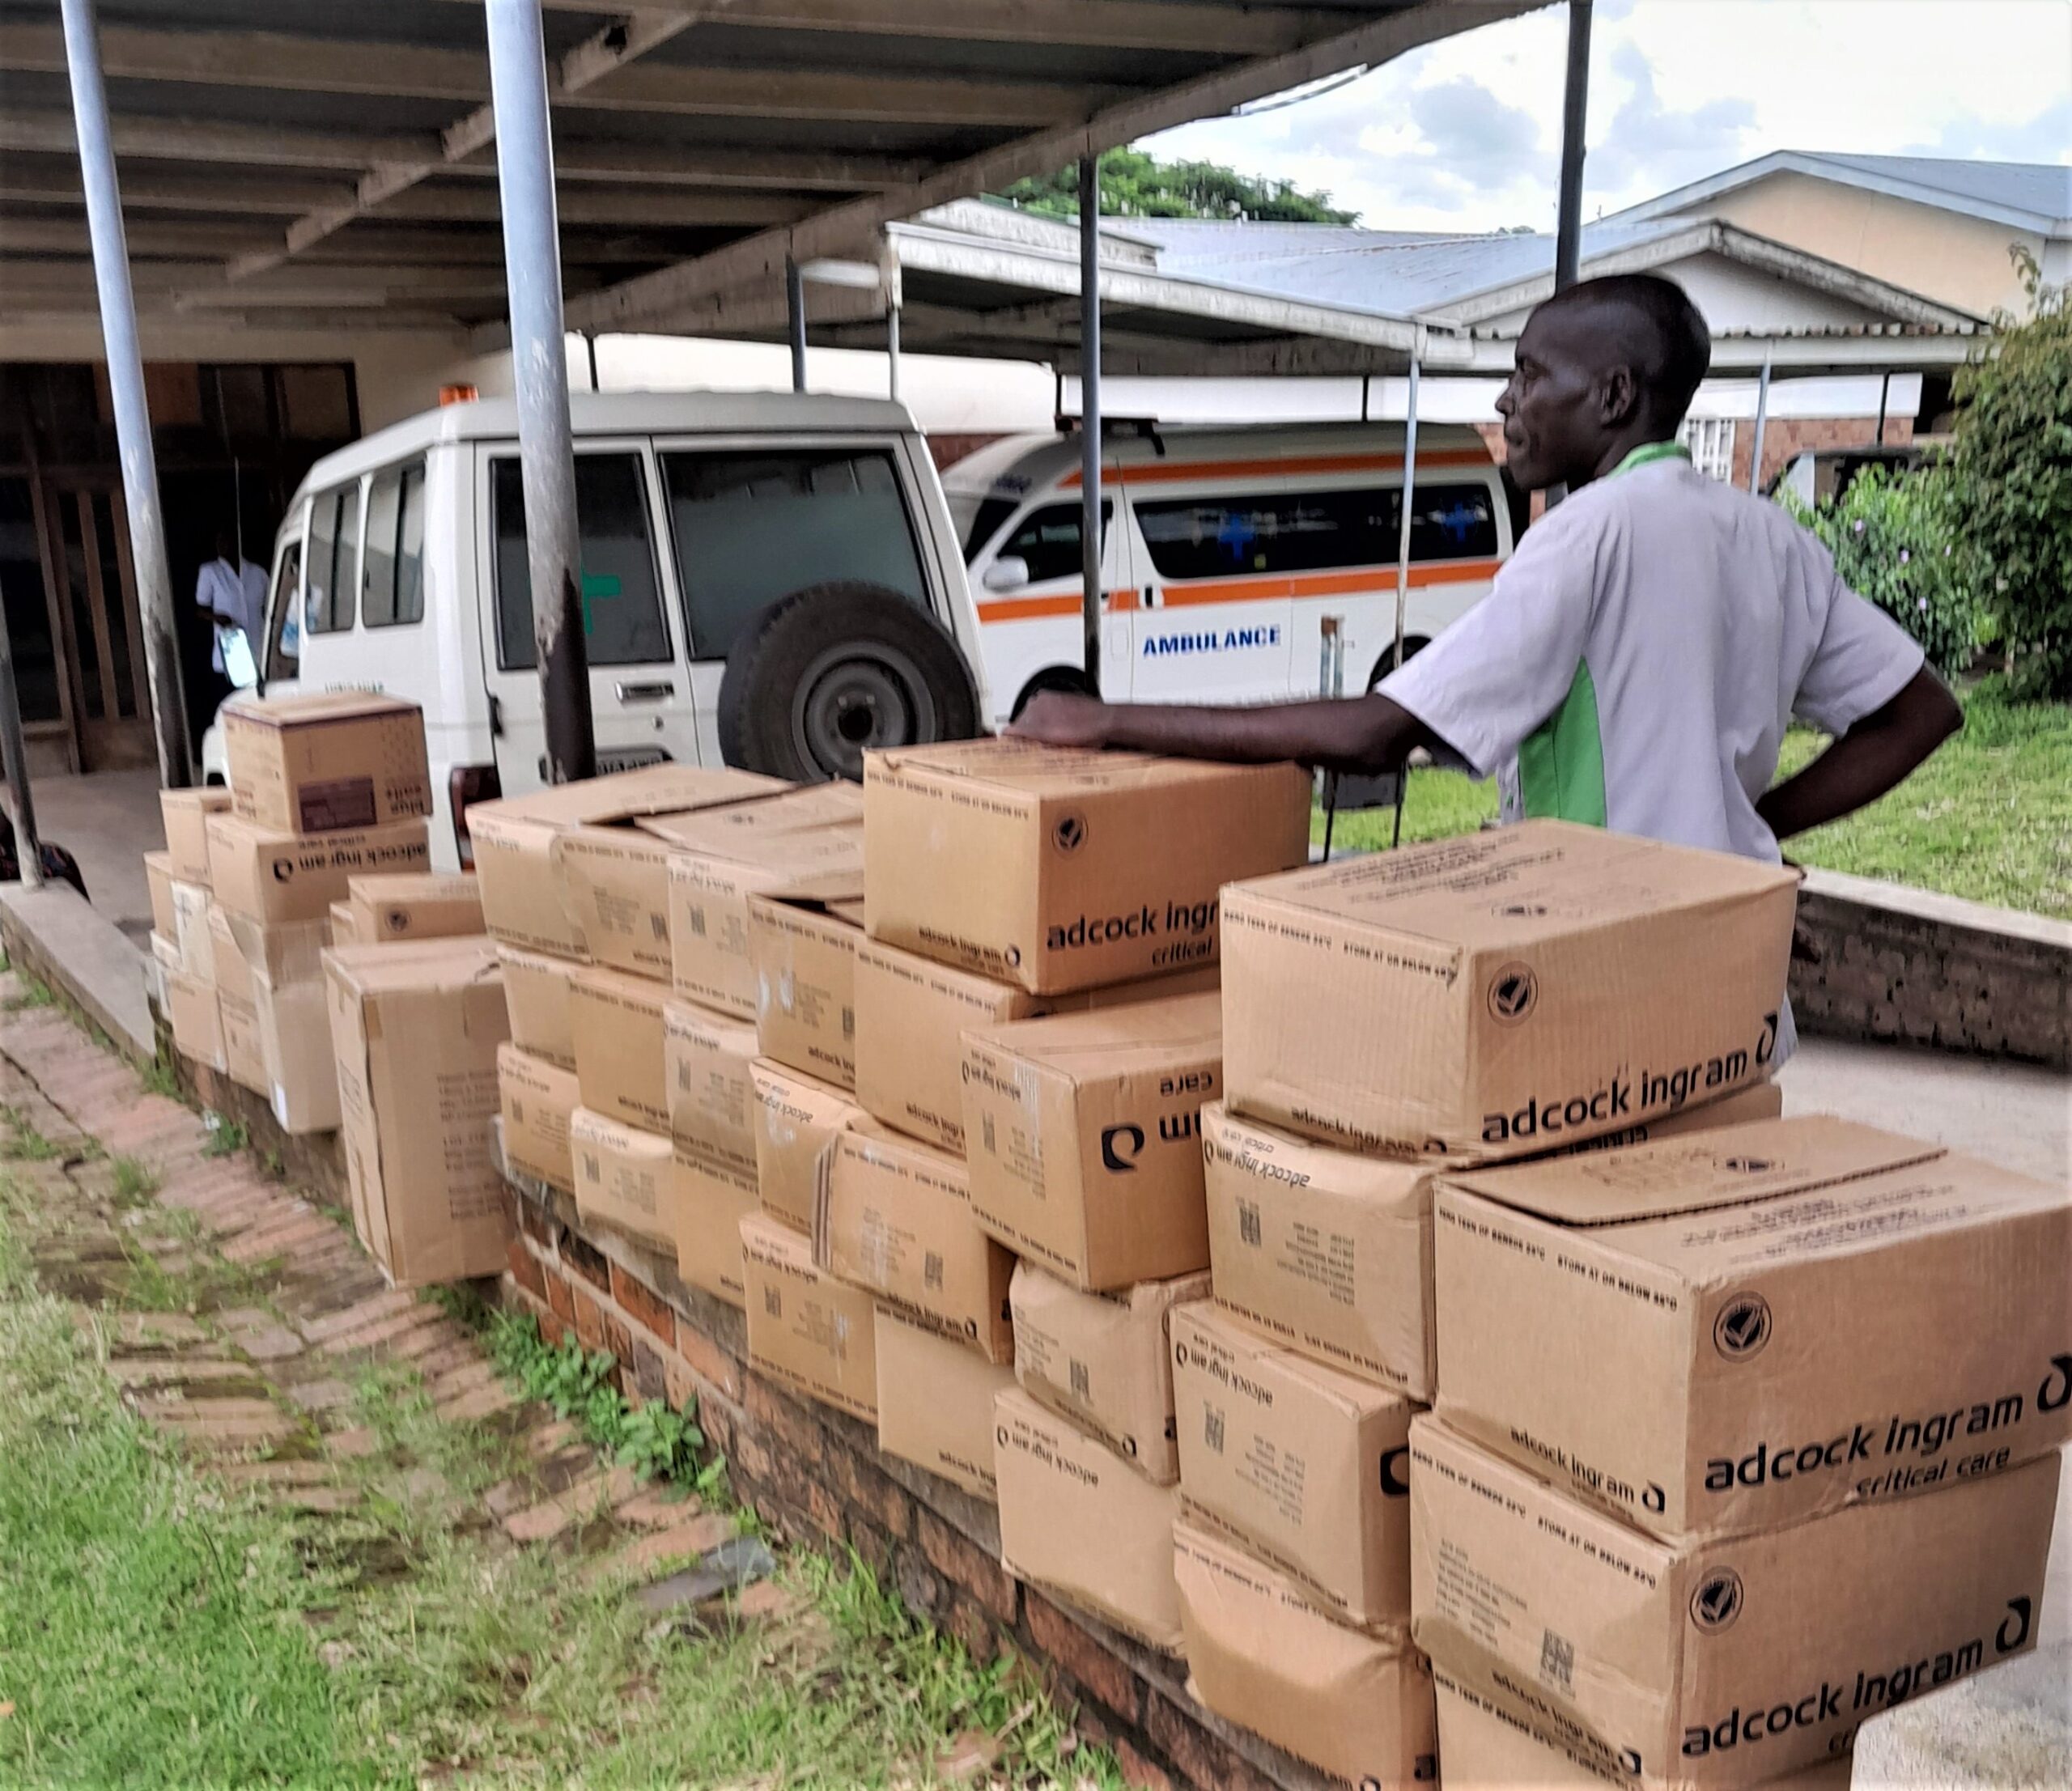 Malawi medical supplies by Esharelife